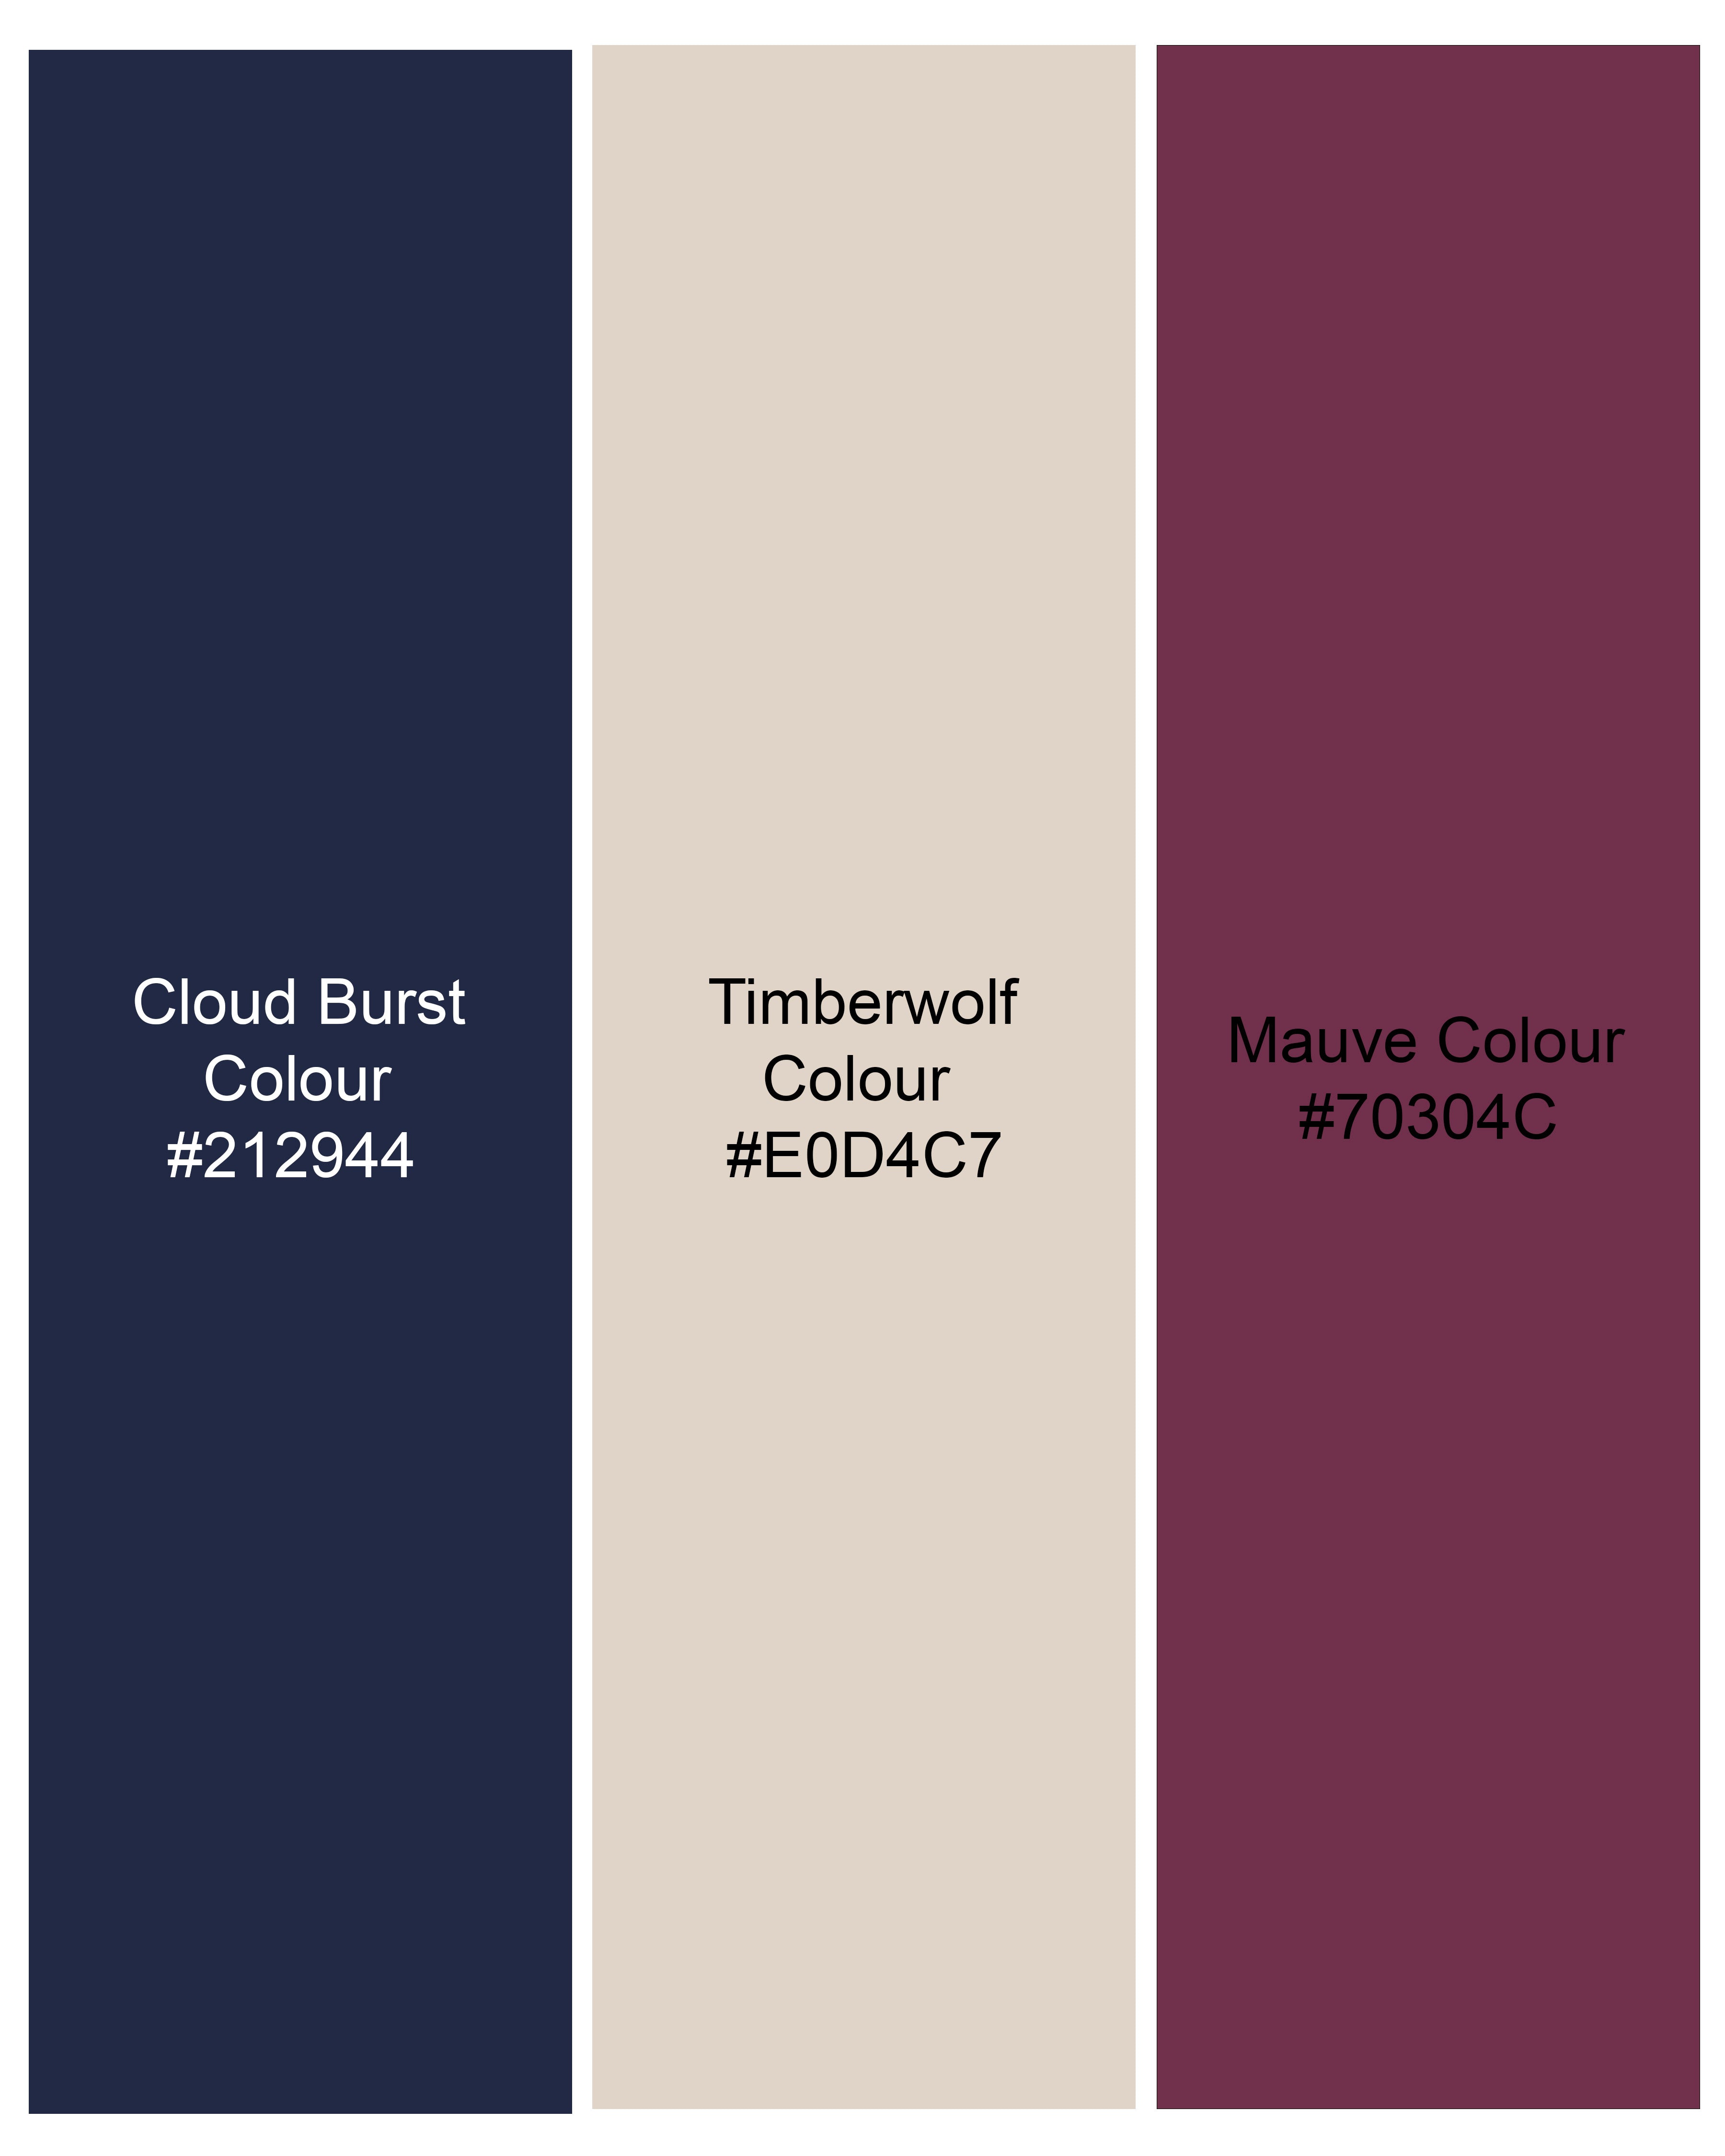 Cloud Burst Blue with Timberwolf Brown Plaid Twill Premium Cotton Shirt 9520-38, 9520-H-38, 9520-39, 9520-H-39, 9520-40, 9520-H-40, 9520-42, 9520-H-42, 9520-44, 9520-H-44, 9520-46, 9520-H-46, 9520-48, 9520-H-48, 9520-50, 9520-H-50, 9520-52, 9520-H-52